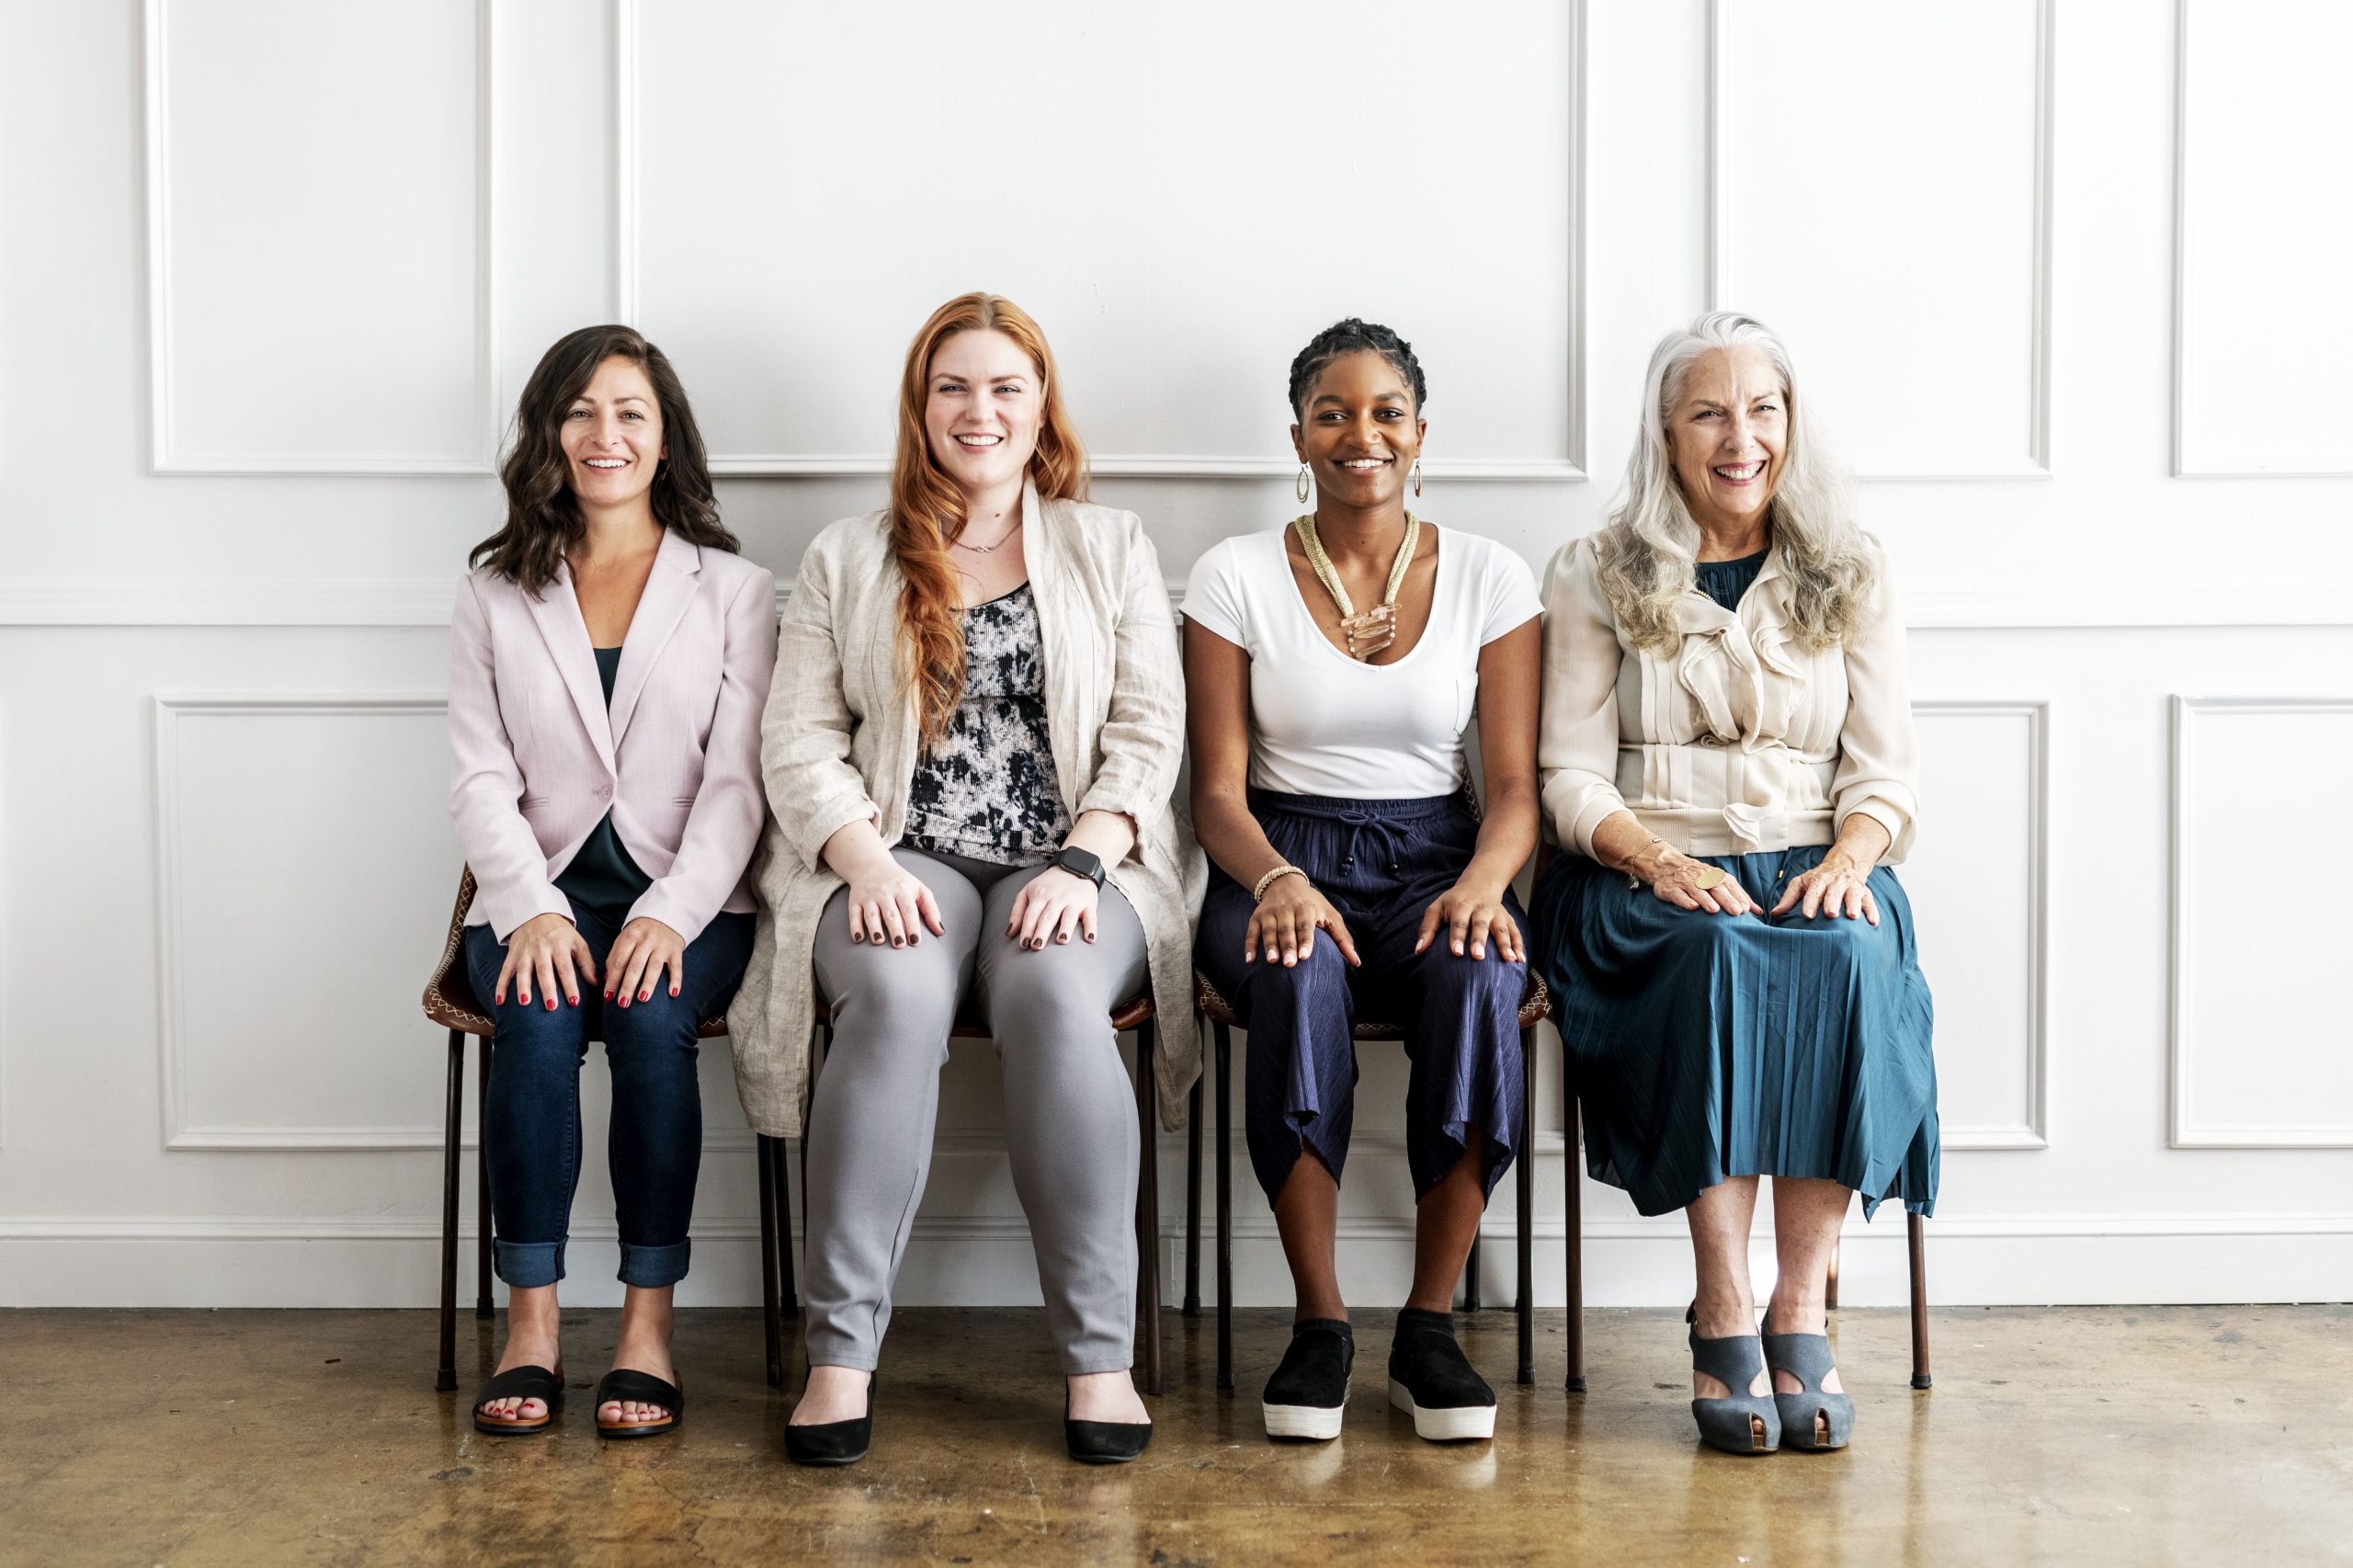 empowering-gorgeous-businesswomen-sitting-together-2023-11-27-05-33-08-utc-min-scaled.jpg